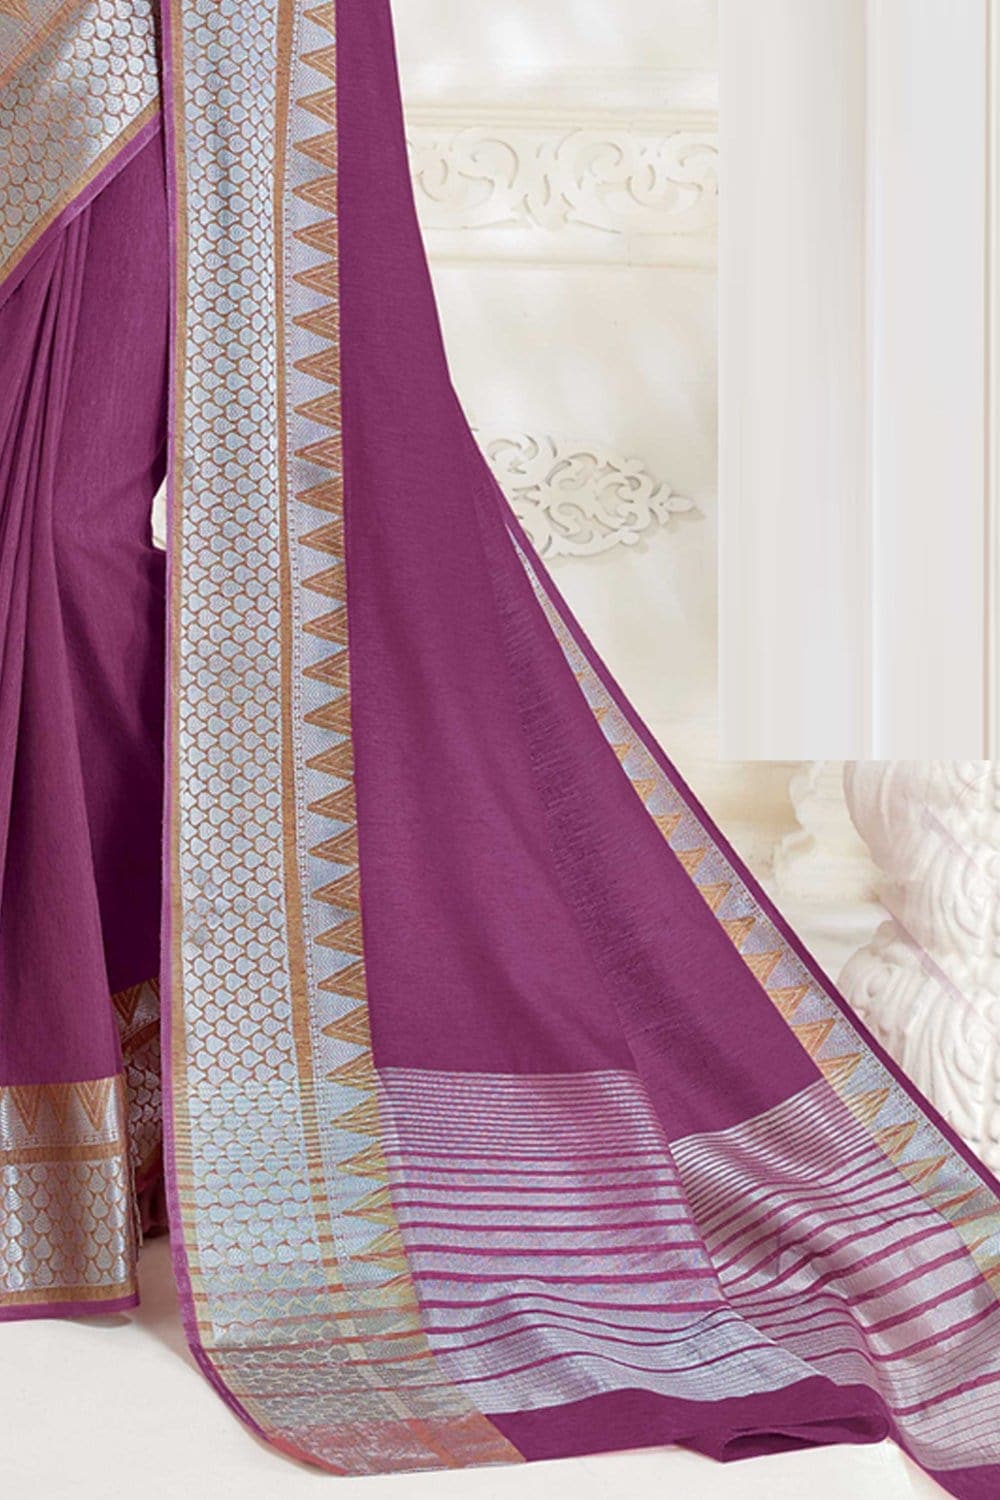 Beautiful Regal Purple Woven South Silk Saree